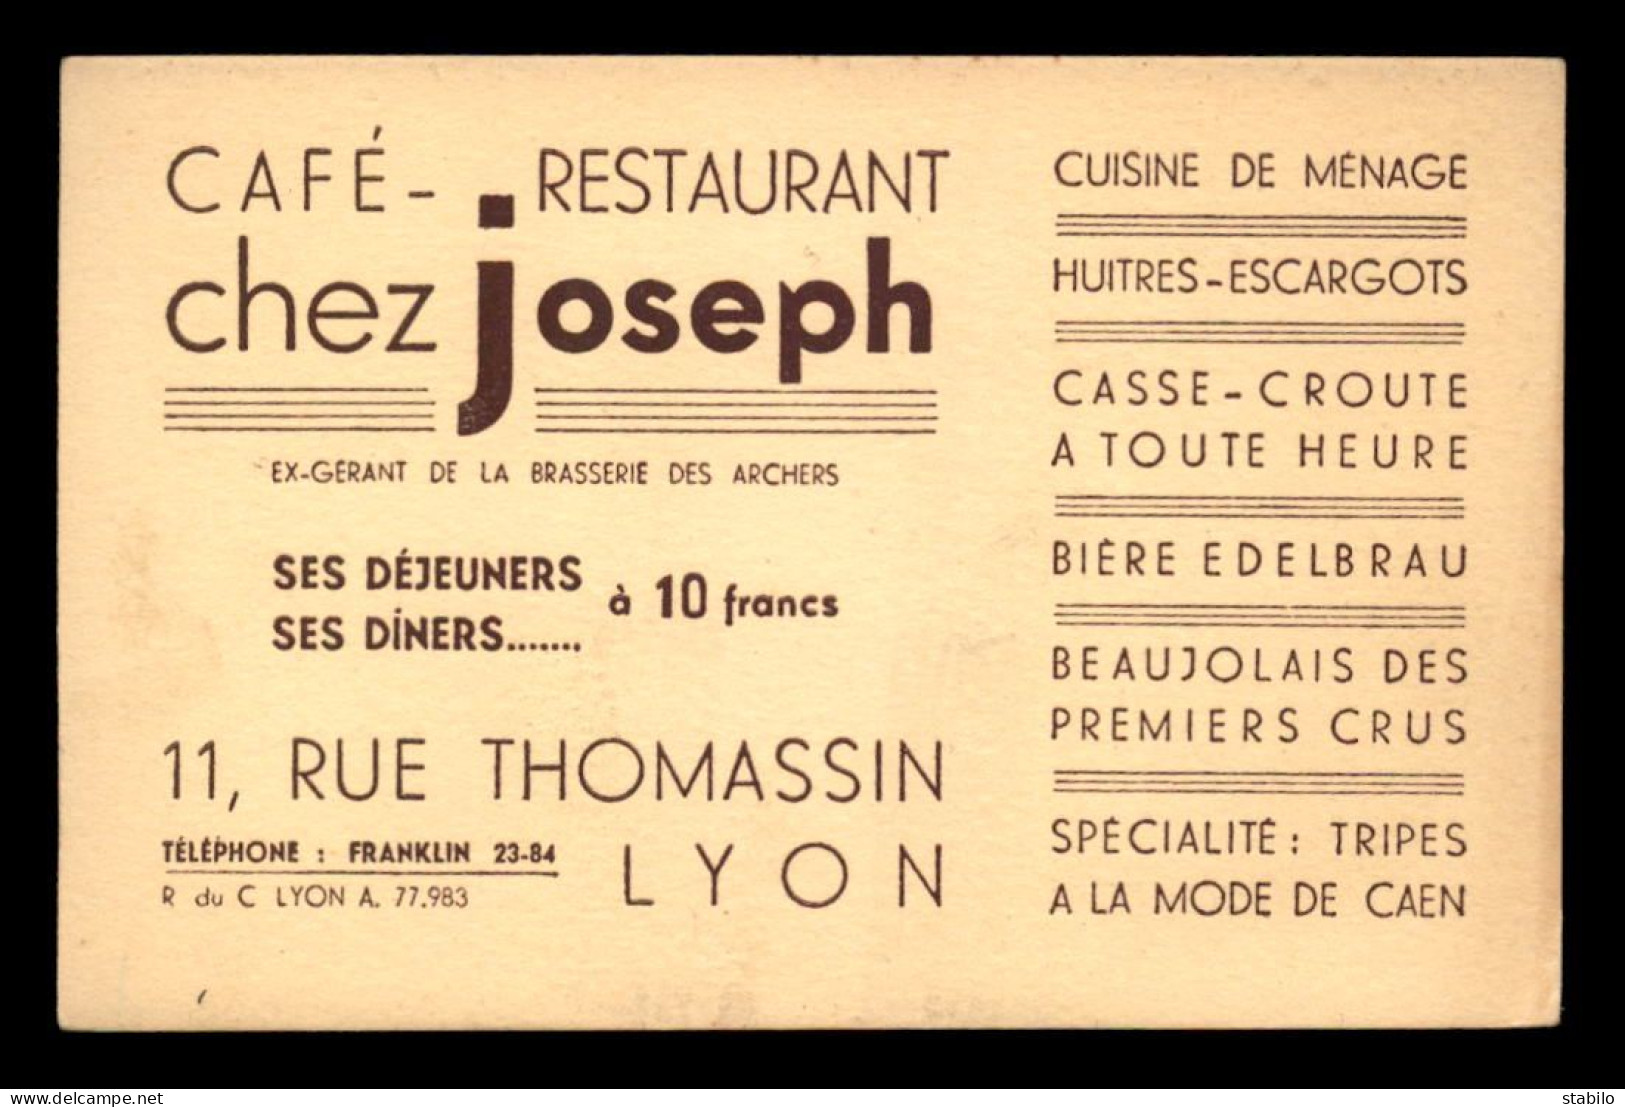 CARTE DE VISITE - CAFE-RESTAURANT "CHEZ JOSEPH" 11 RUE THOMASSIN, LYON - FORMAT 8.5 X 13 CM - Tarjetas De Visita